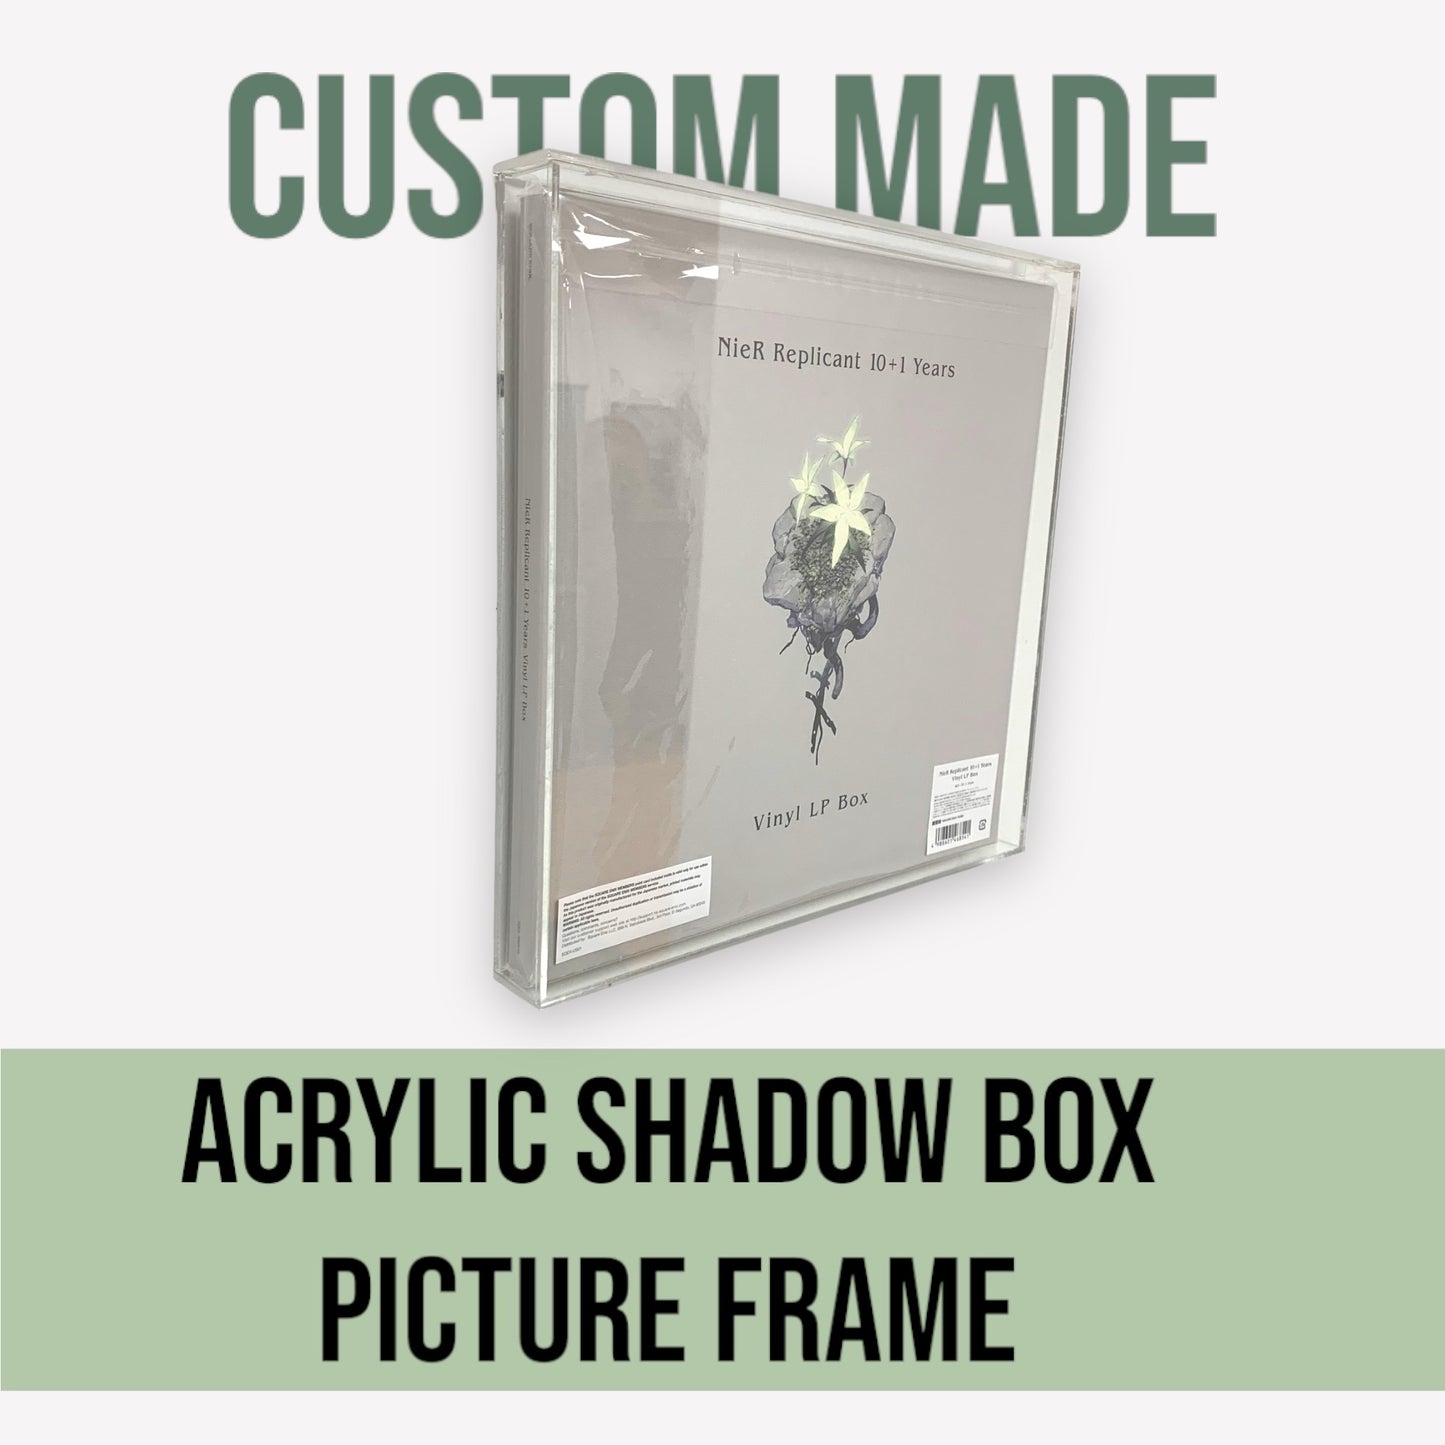 Custom made acrylic shadow boxes